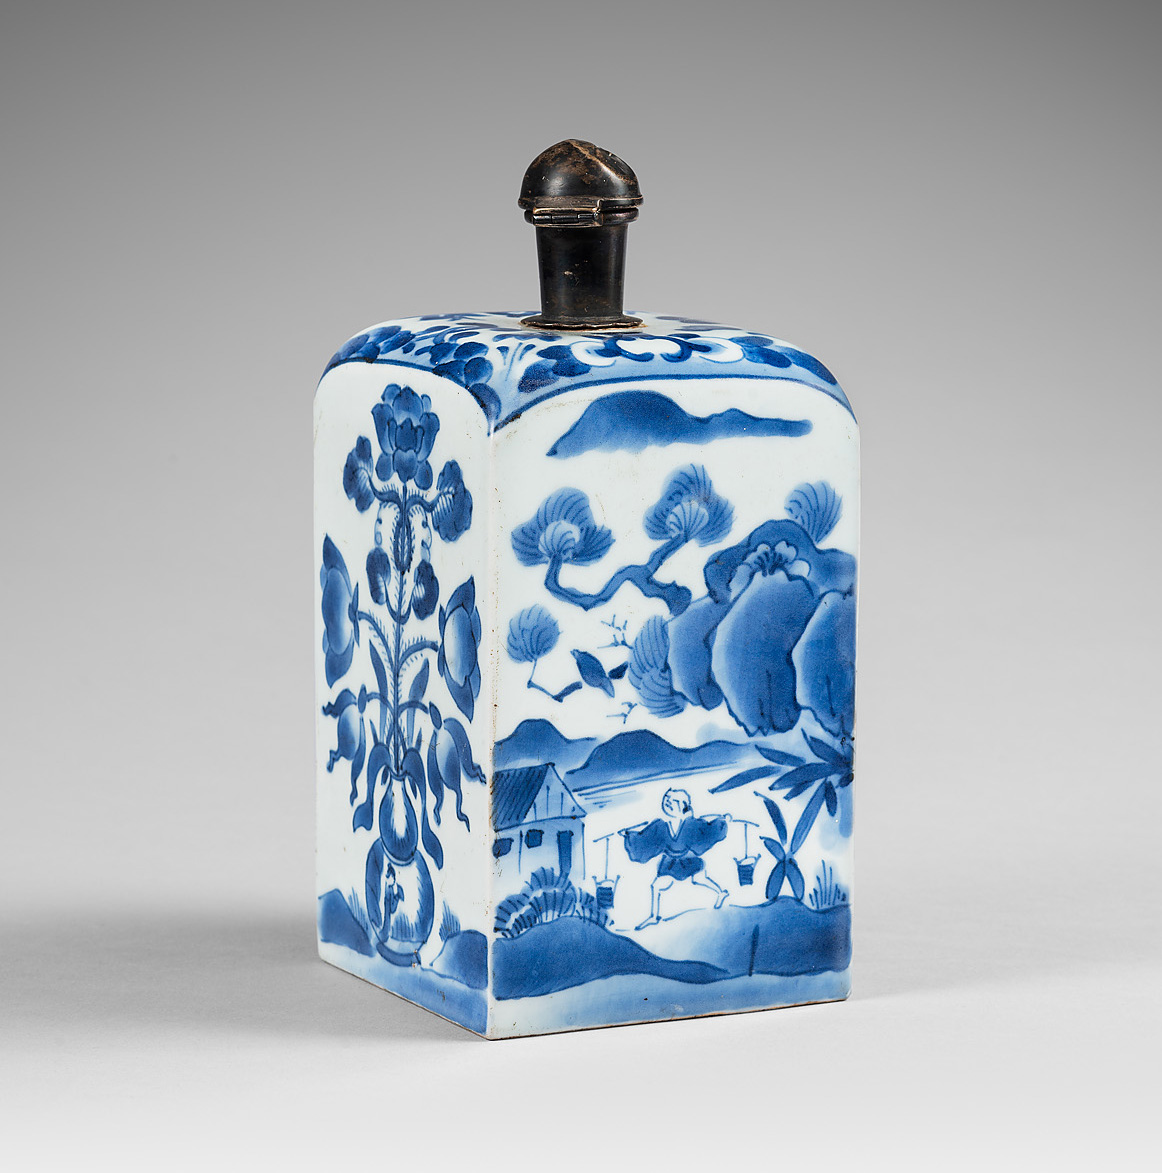 Porcelaine Edo, ca. 1660-1680, Japon